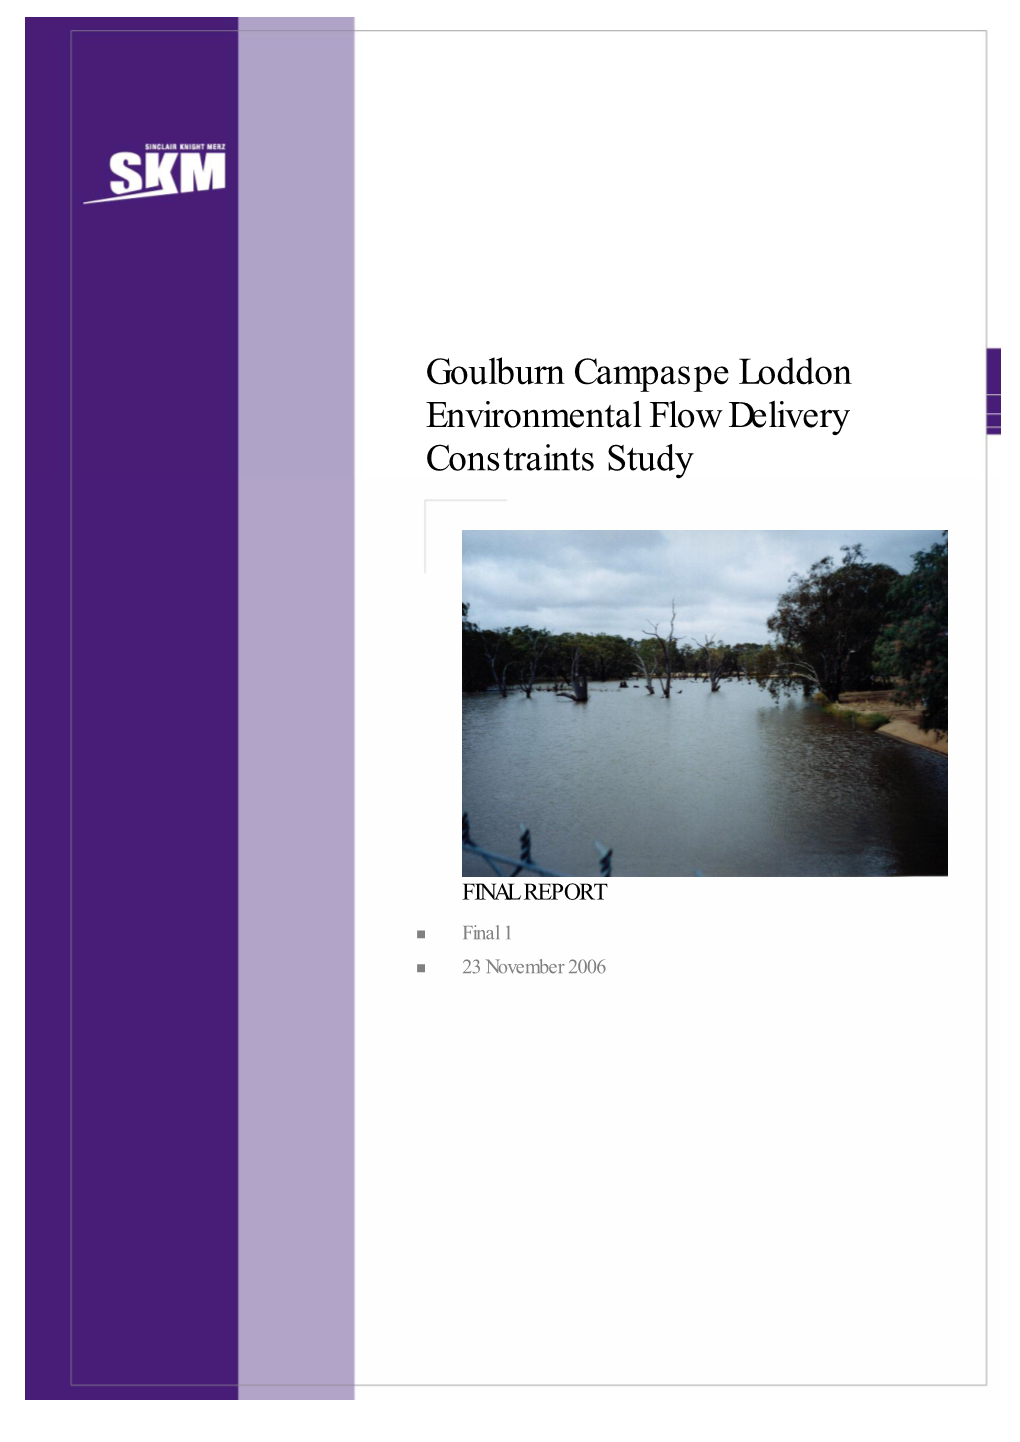 Goulburn Campaspe Loddon Environmental Flow Delivery Constraints Study